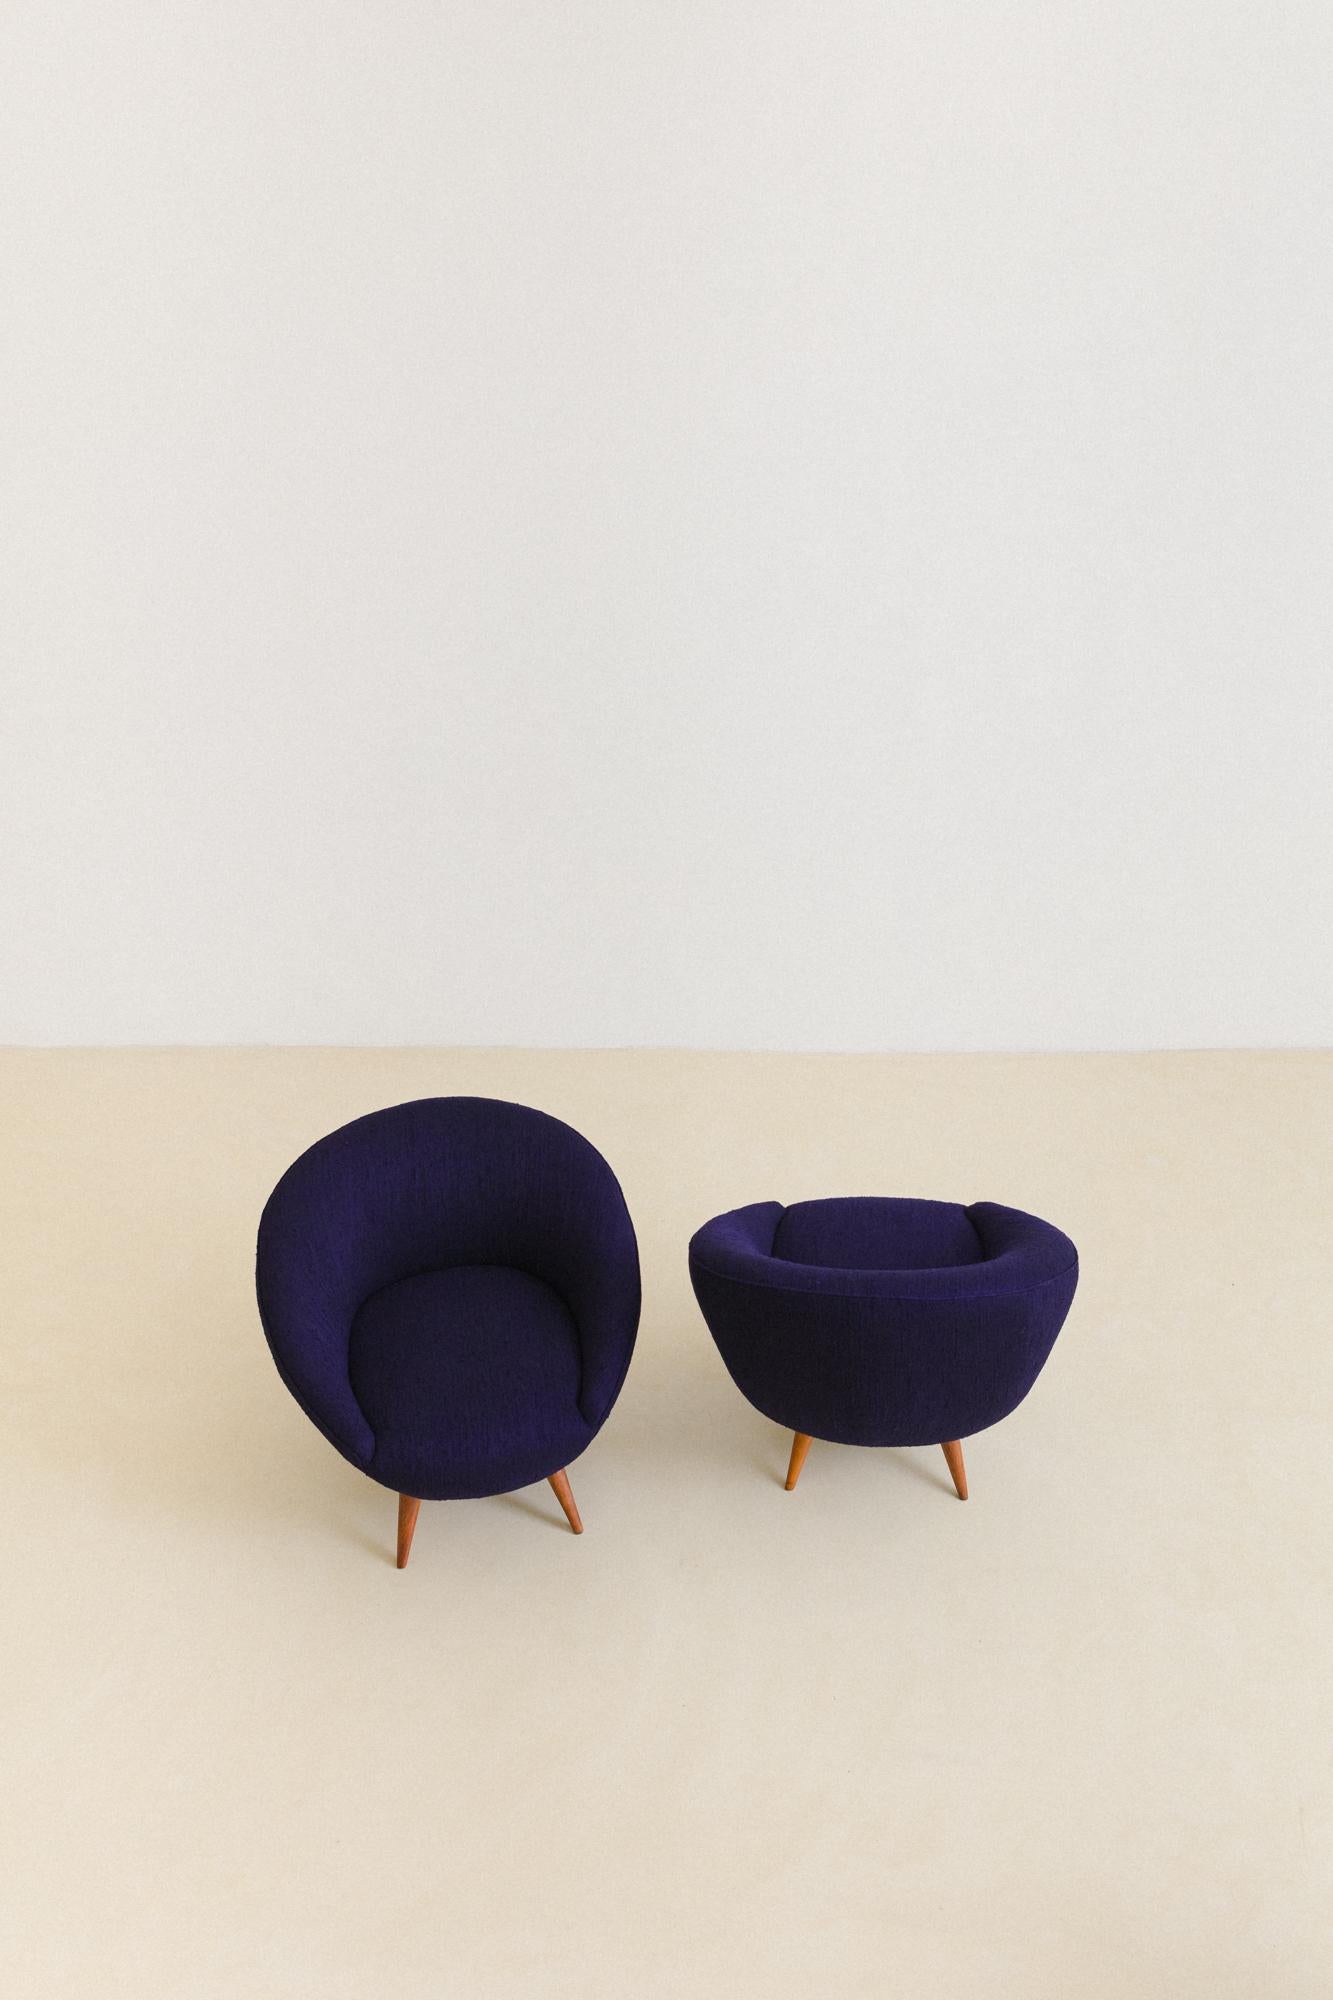 Brazilian Midcentury Design, Round Armchairs, Organic Silk Upholstery, 1950s For Sale 7